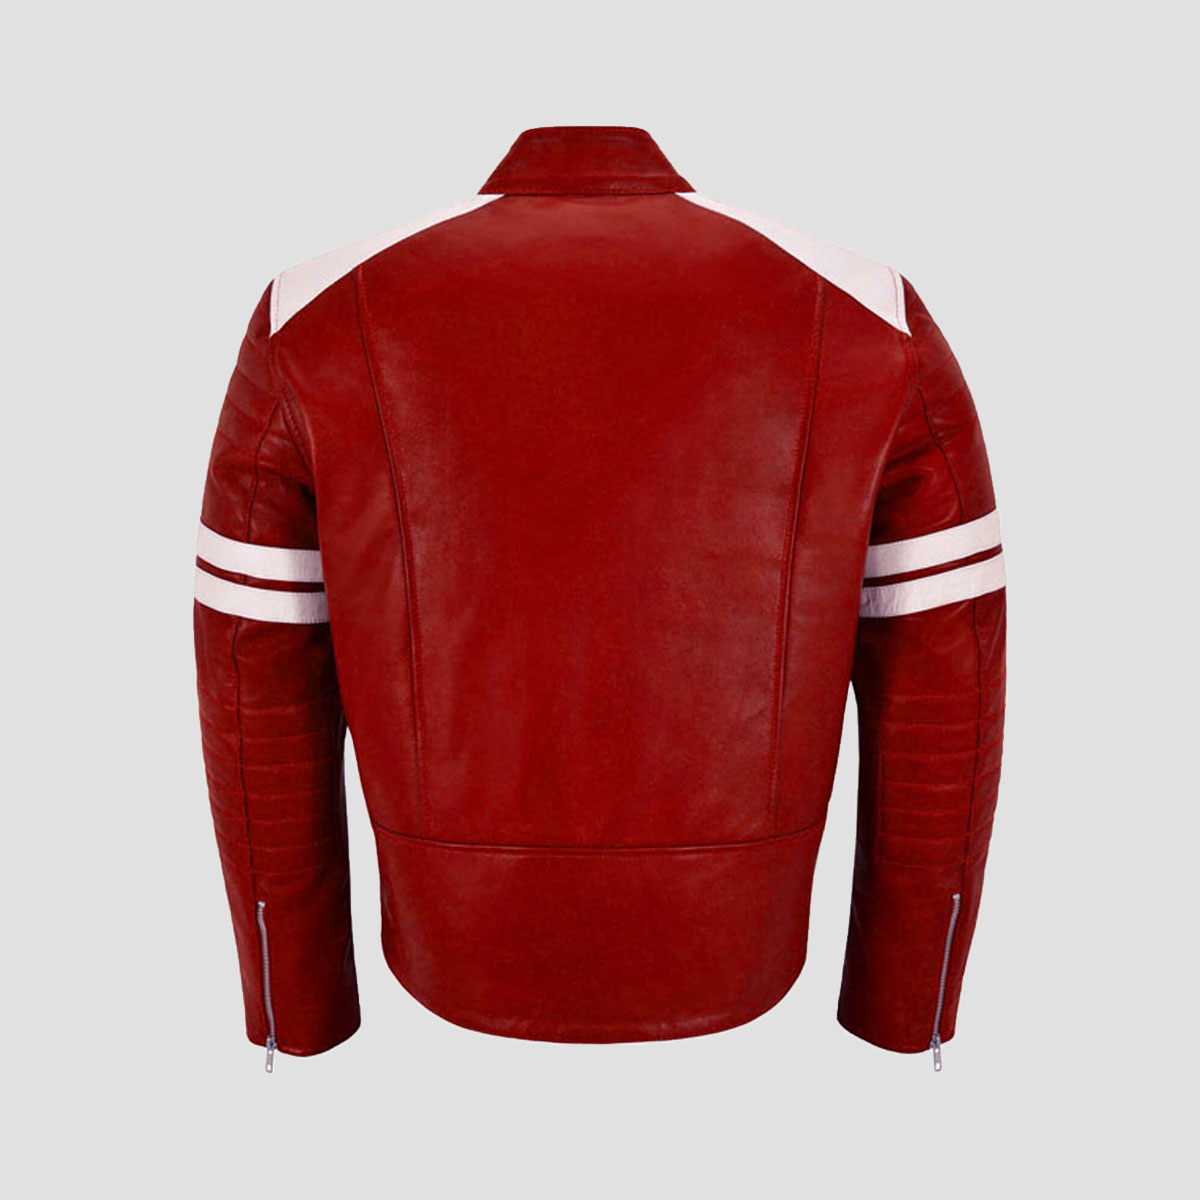 Usaleatherfactory Men's Vintage Racer Leather Jacket